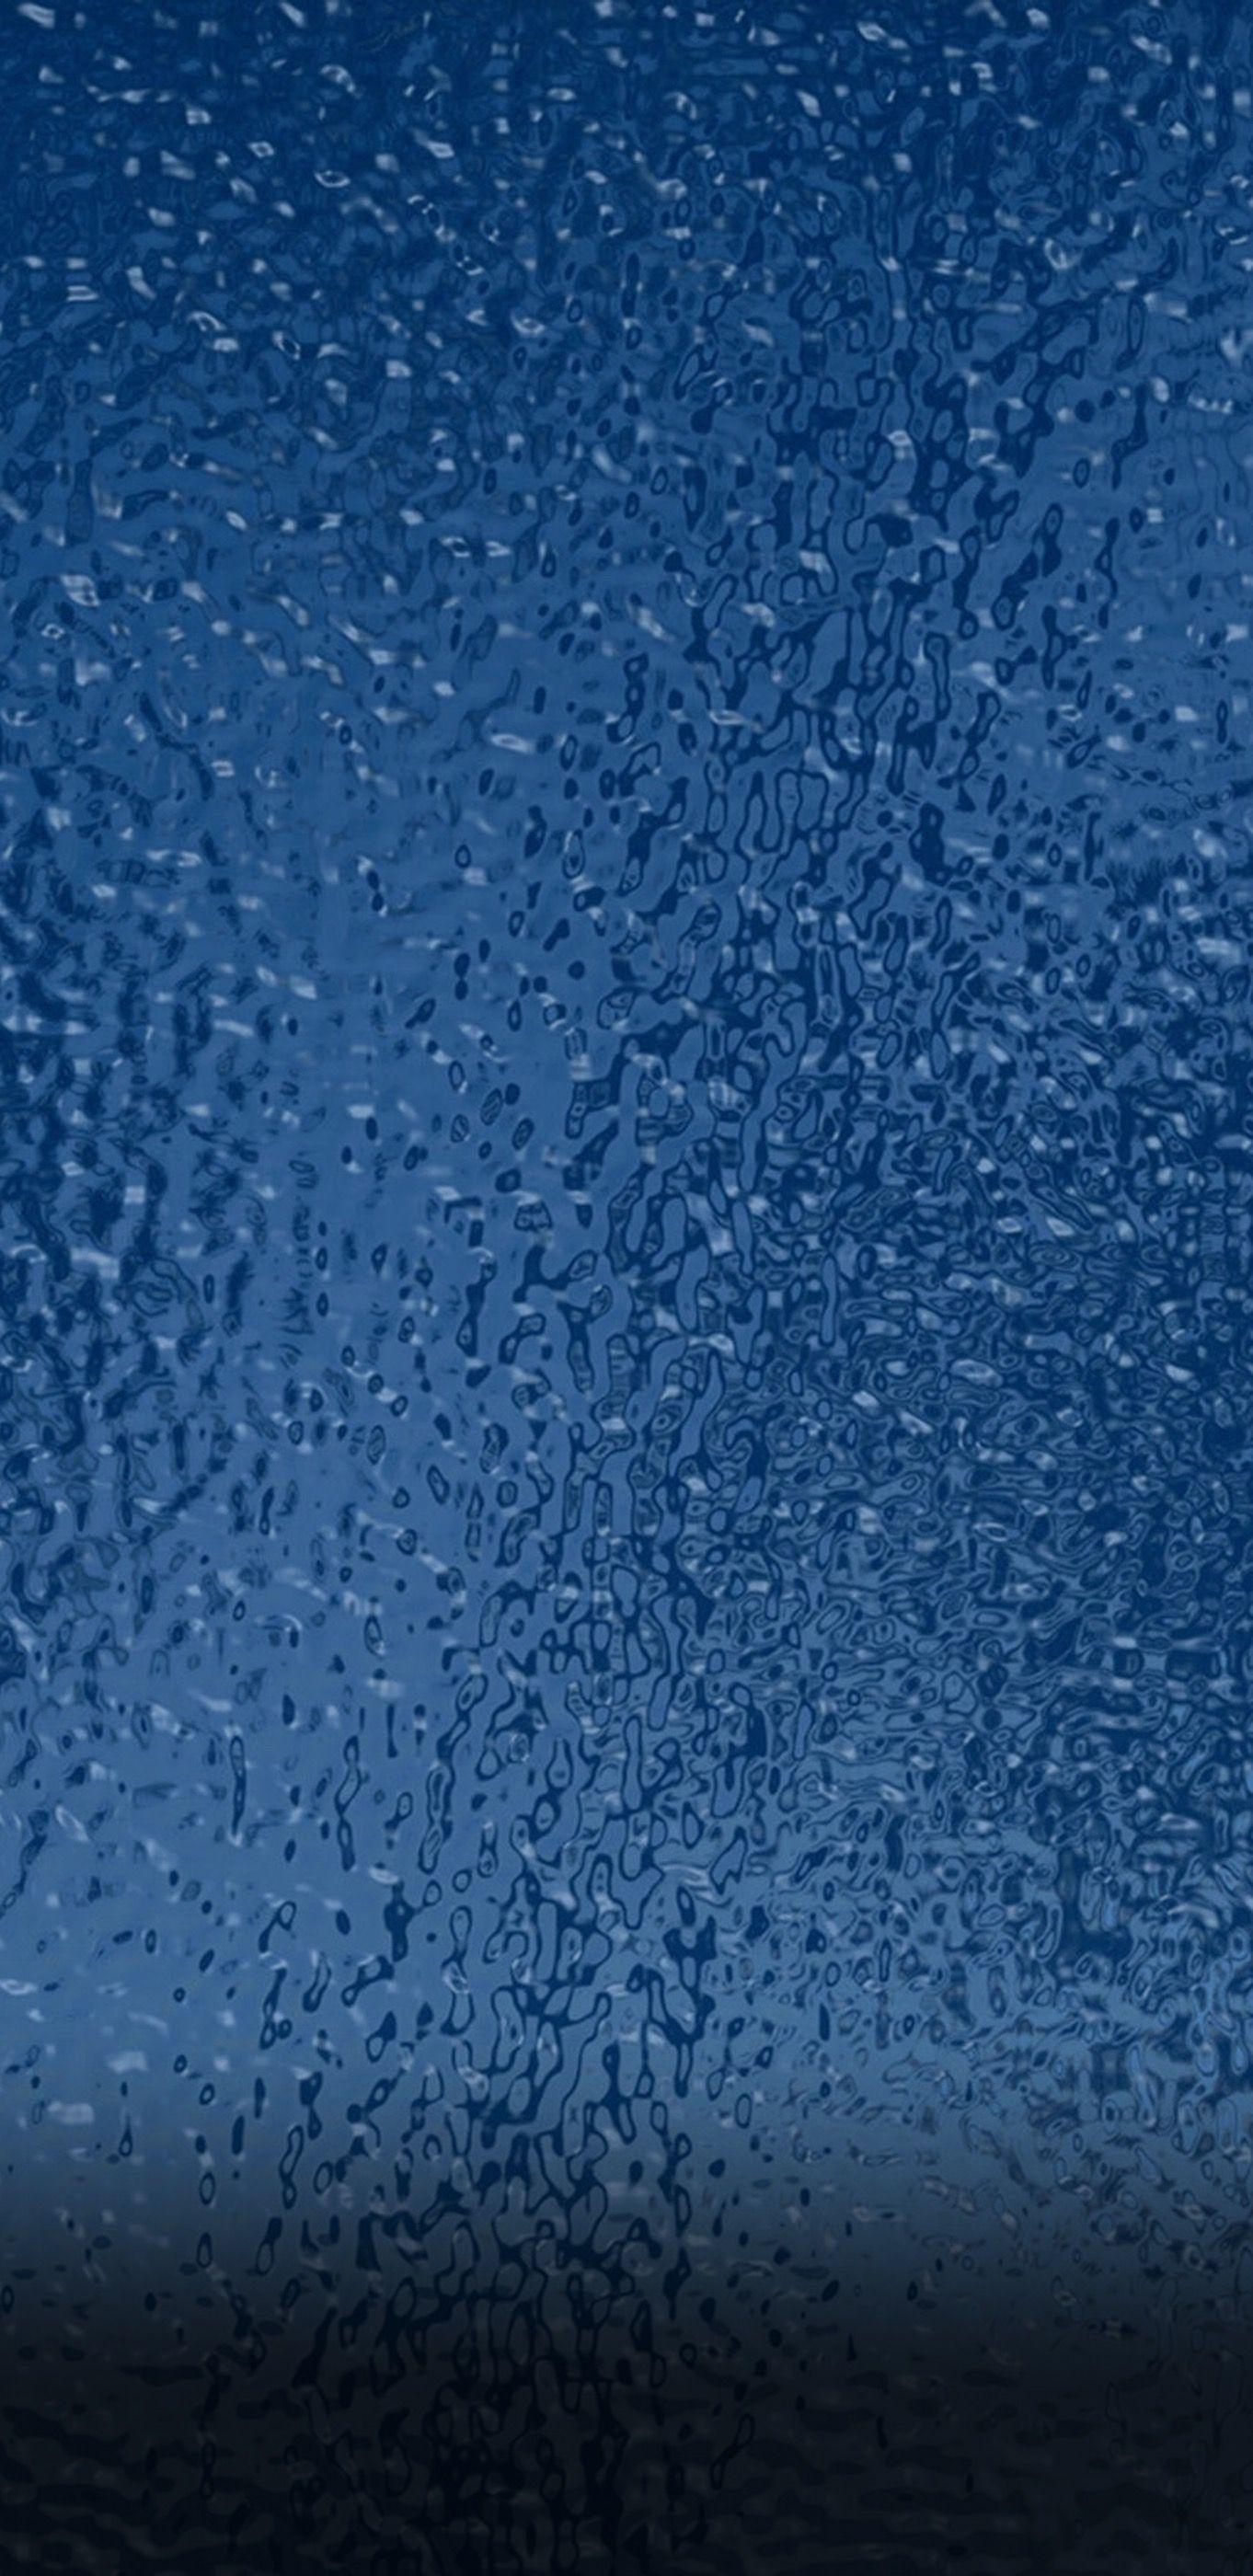 S wallpaper, background, blue, water, water drop, glass, dark